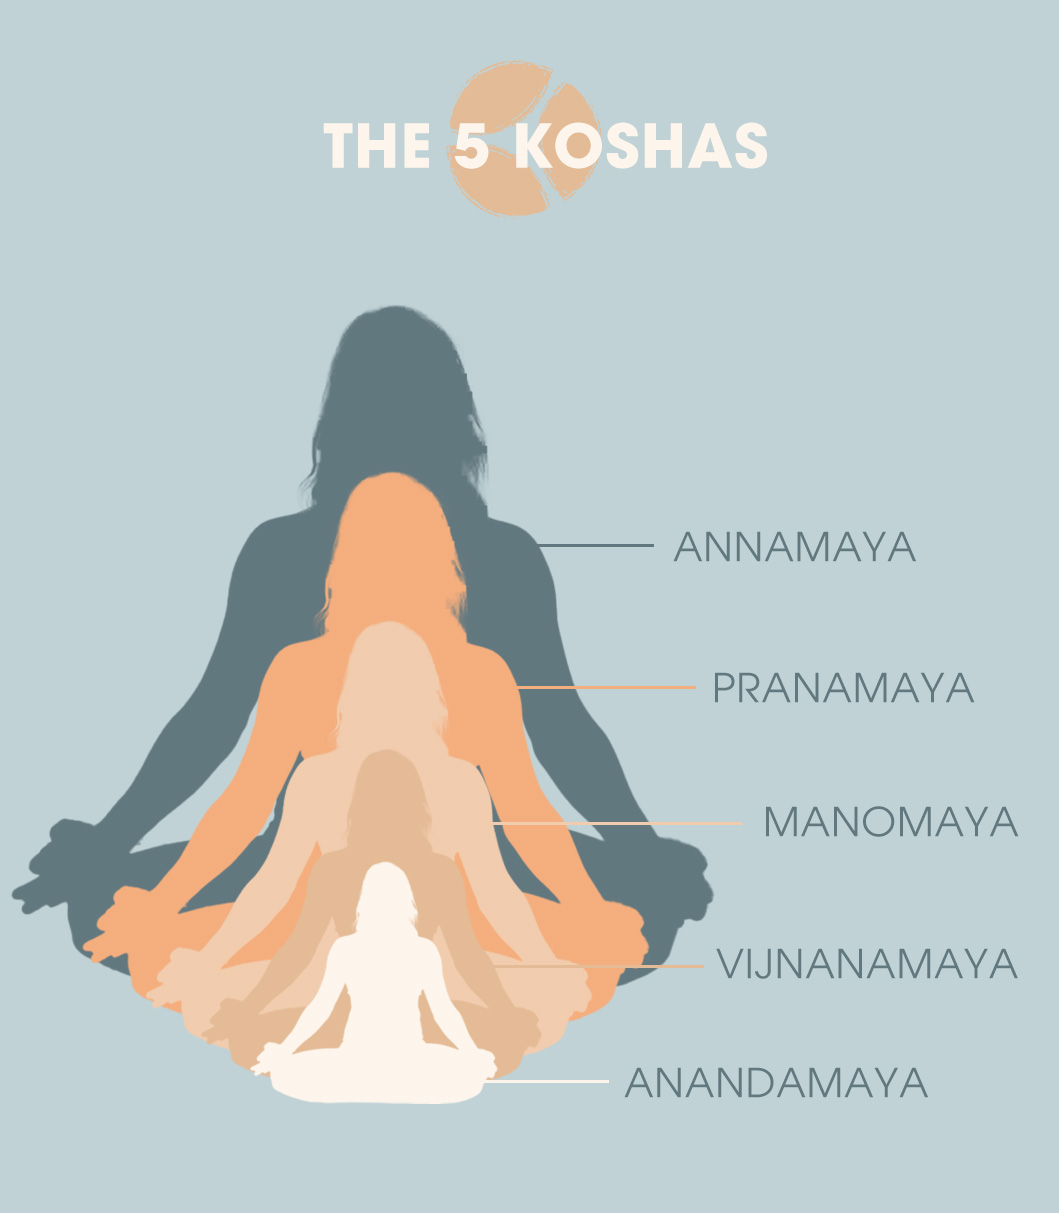 The 5 Koshas custom illustration